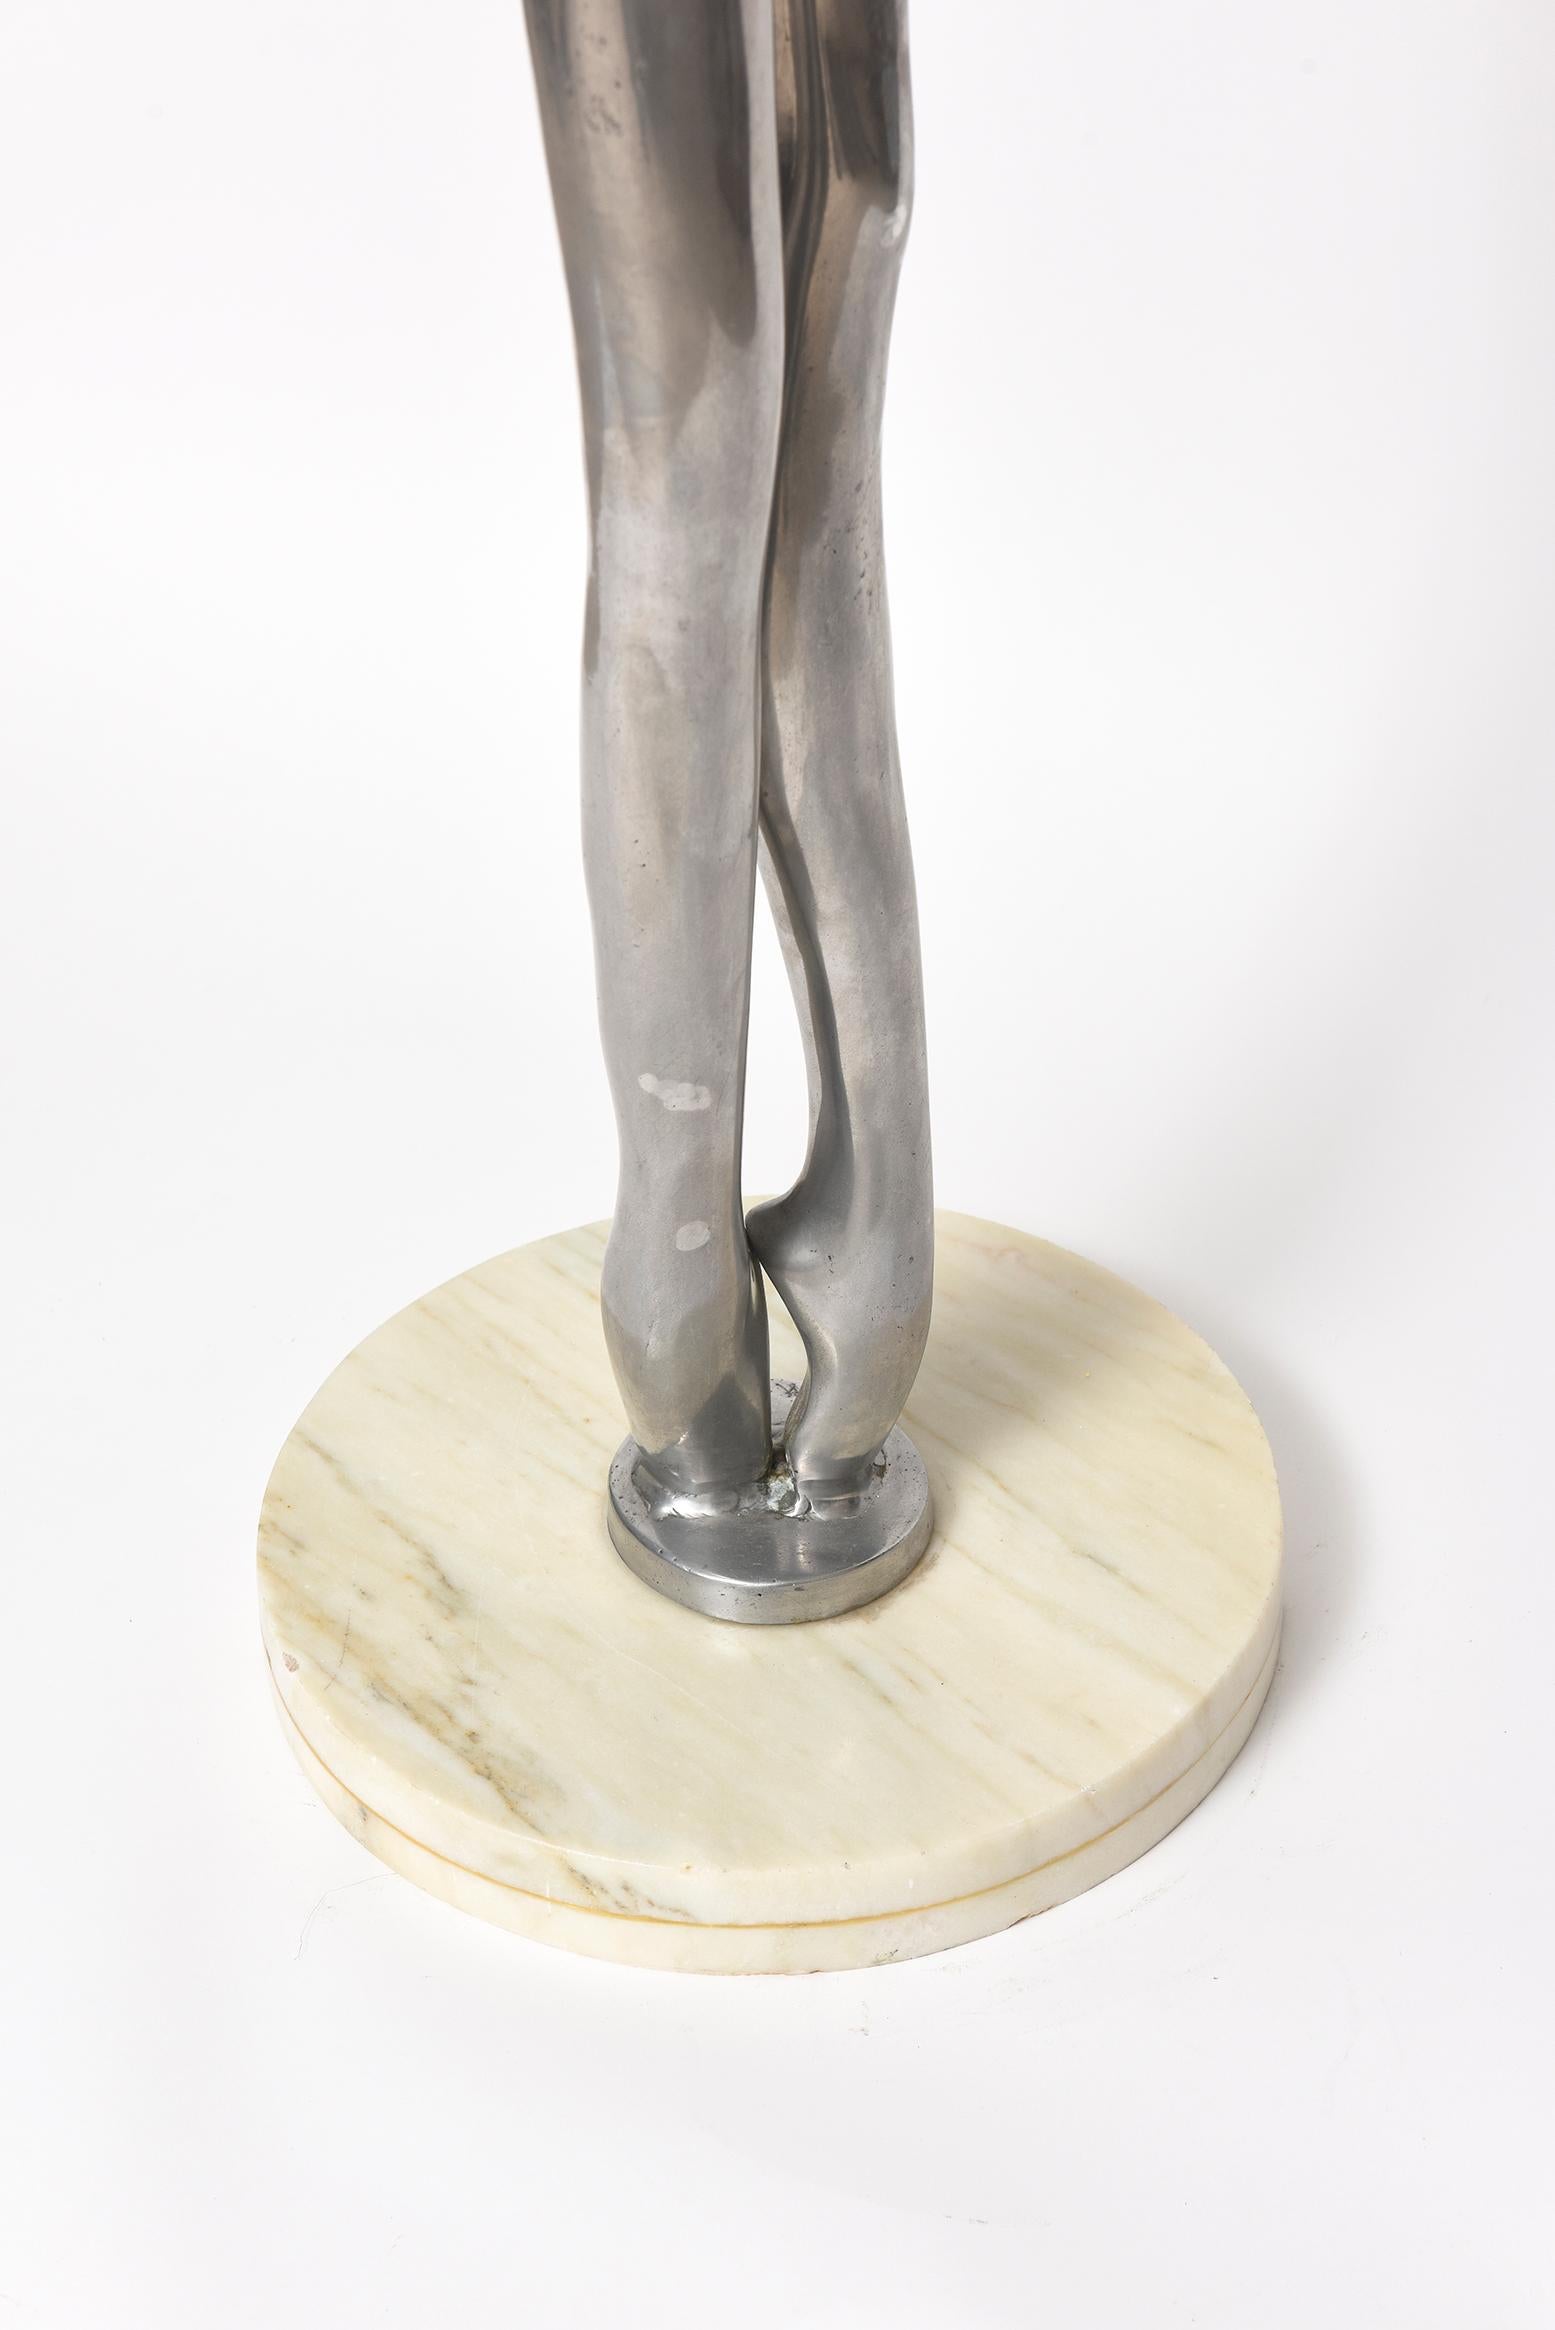 Manuel Carbonell Aluminum Original Casting Dancer Figure Sculpture Cuban Artist For Sale 3